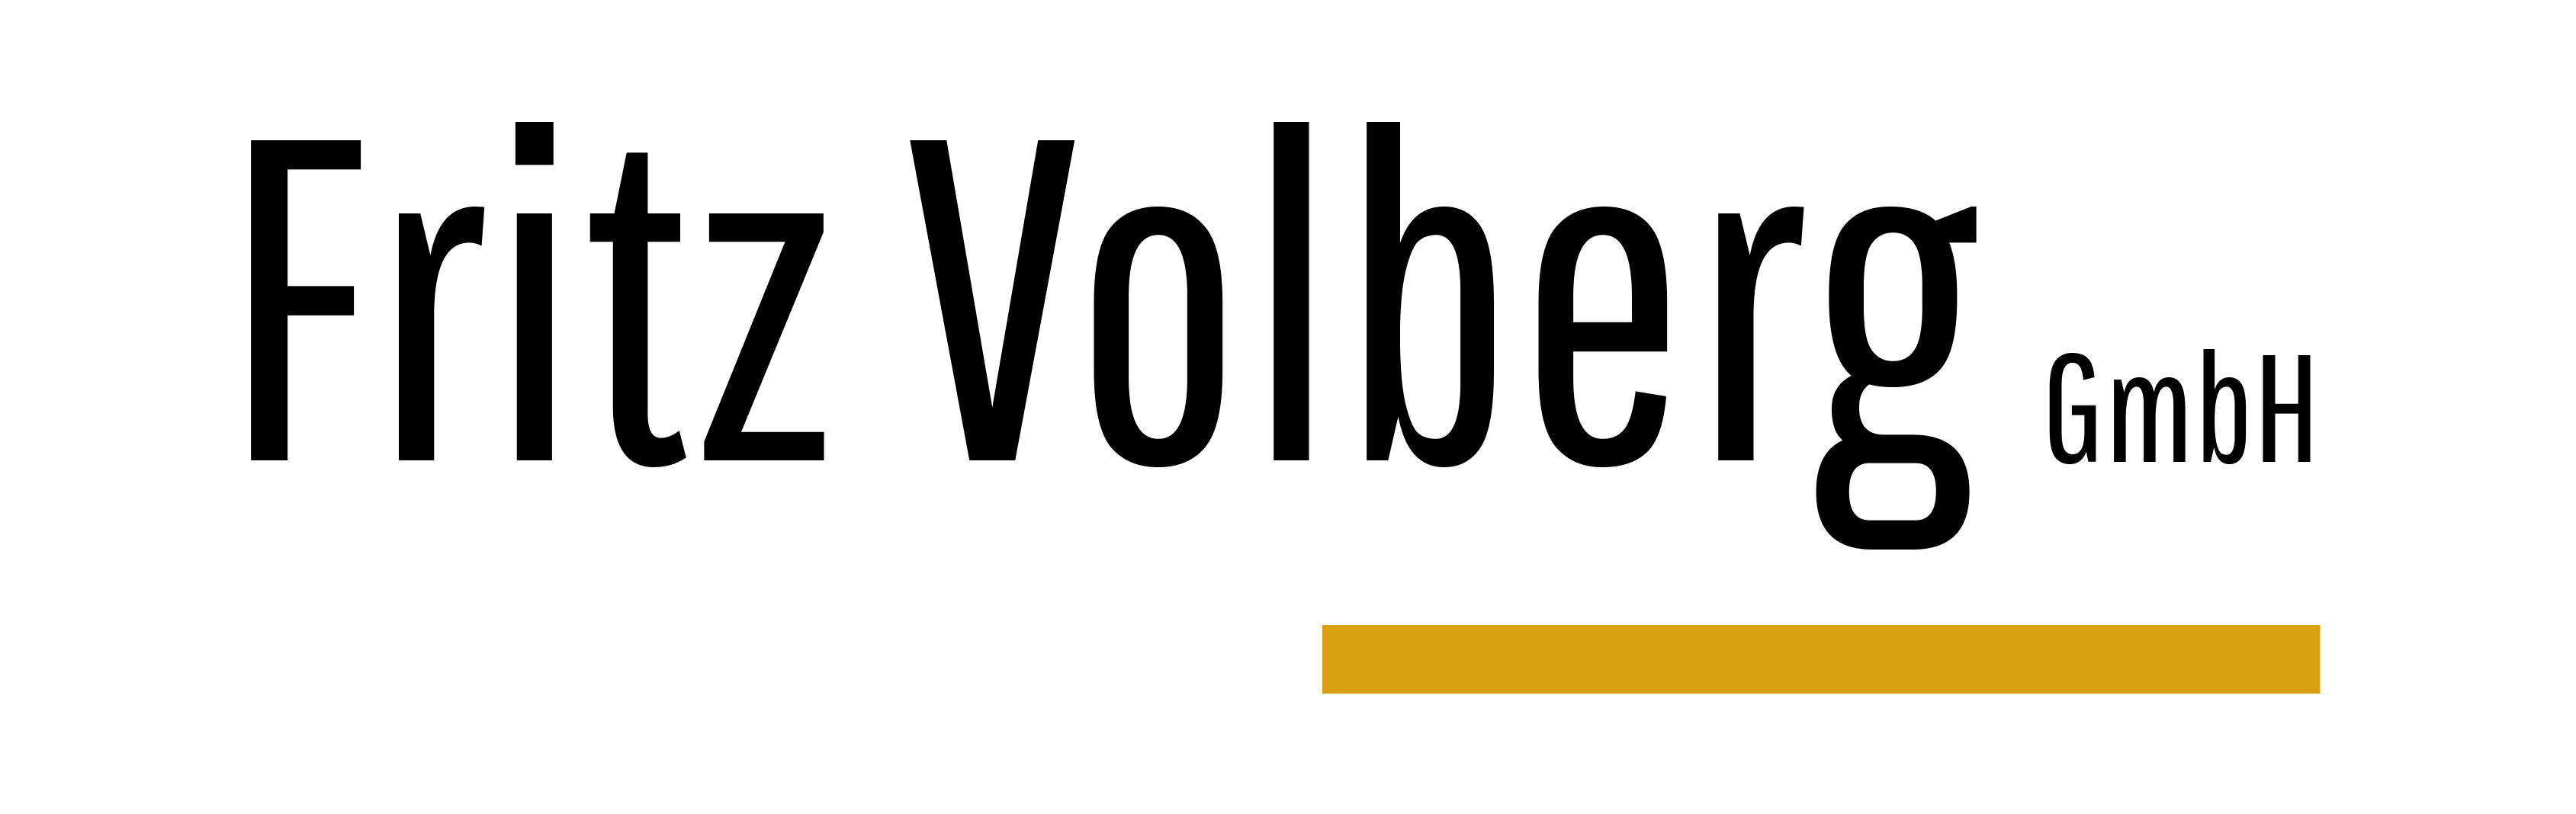 Fritz Volberg GmbH